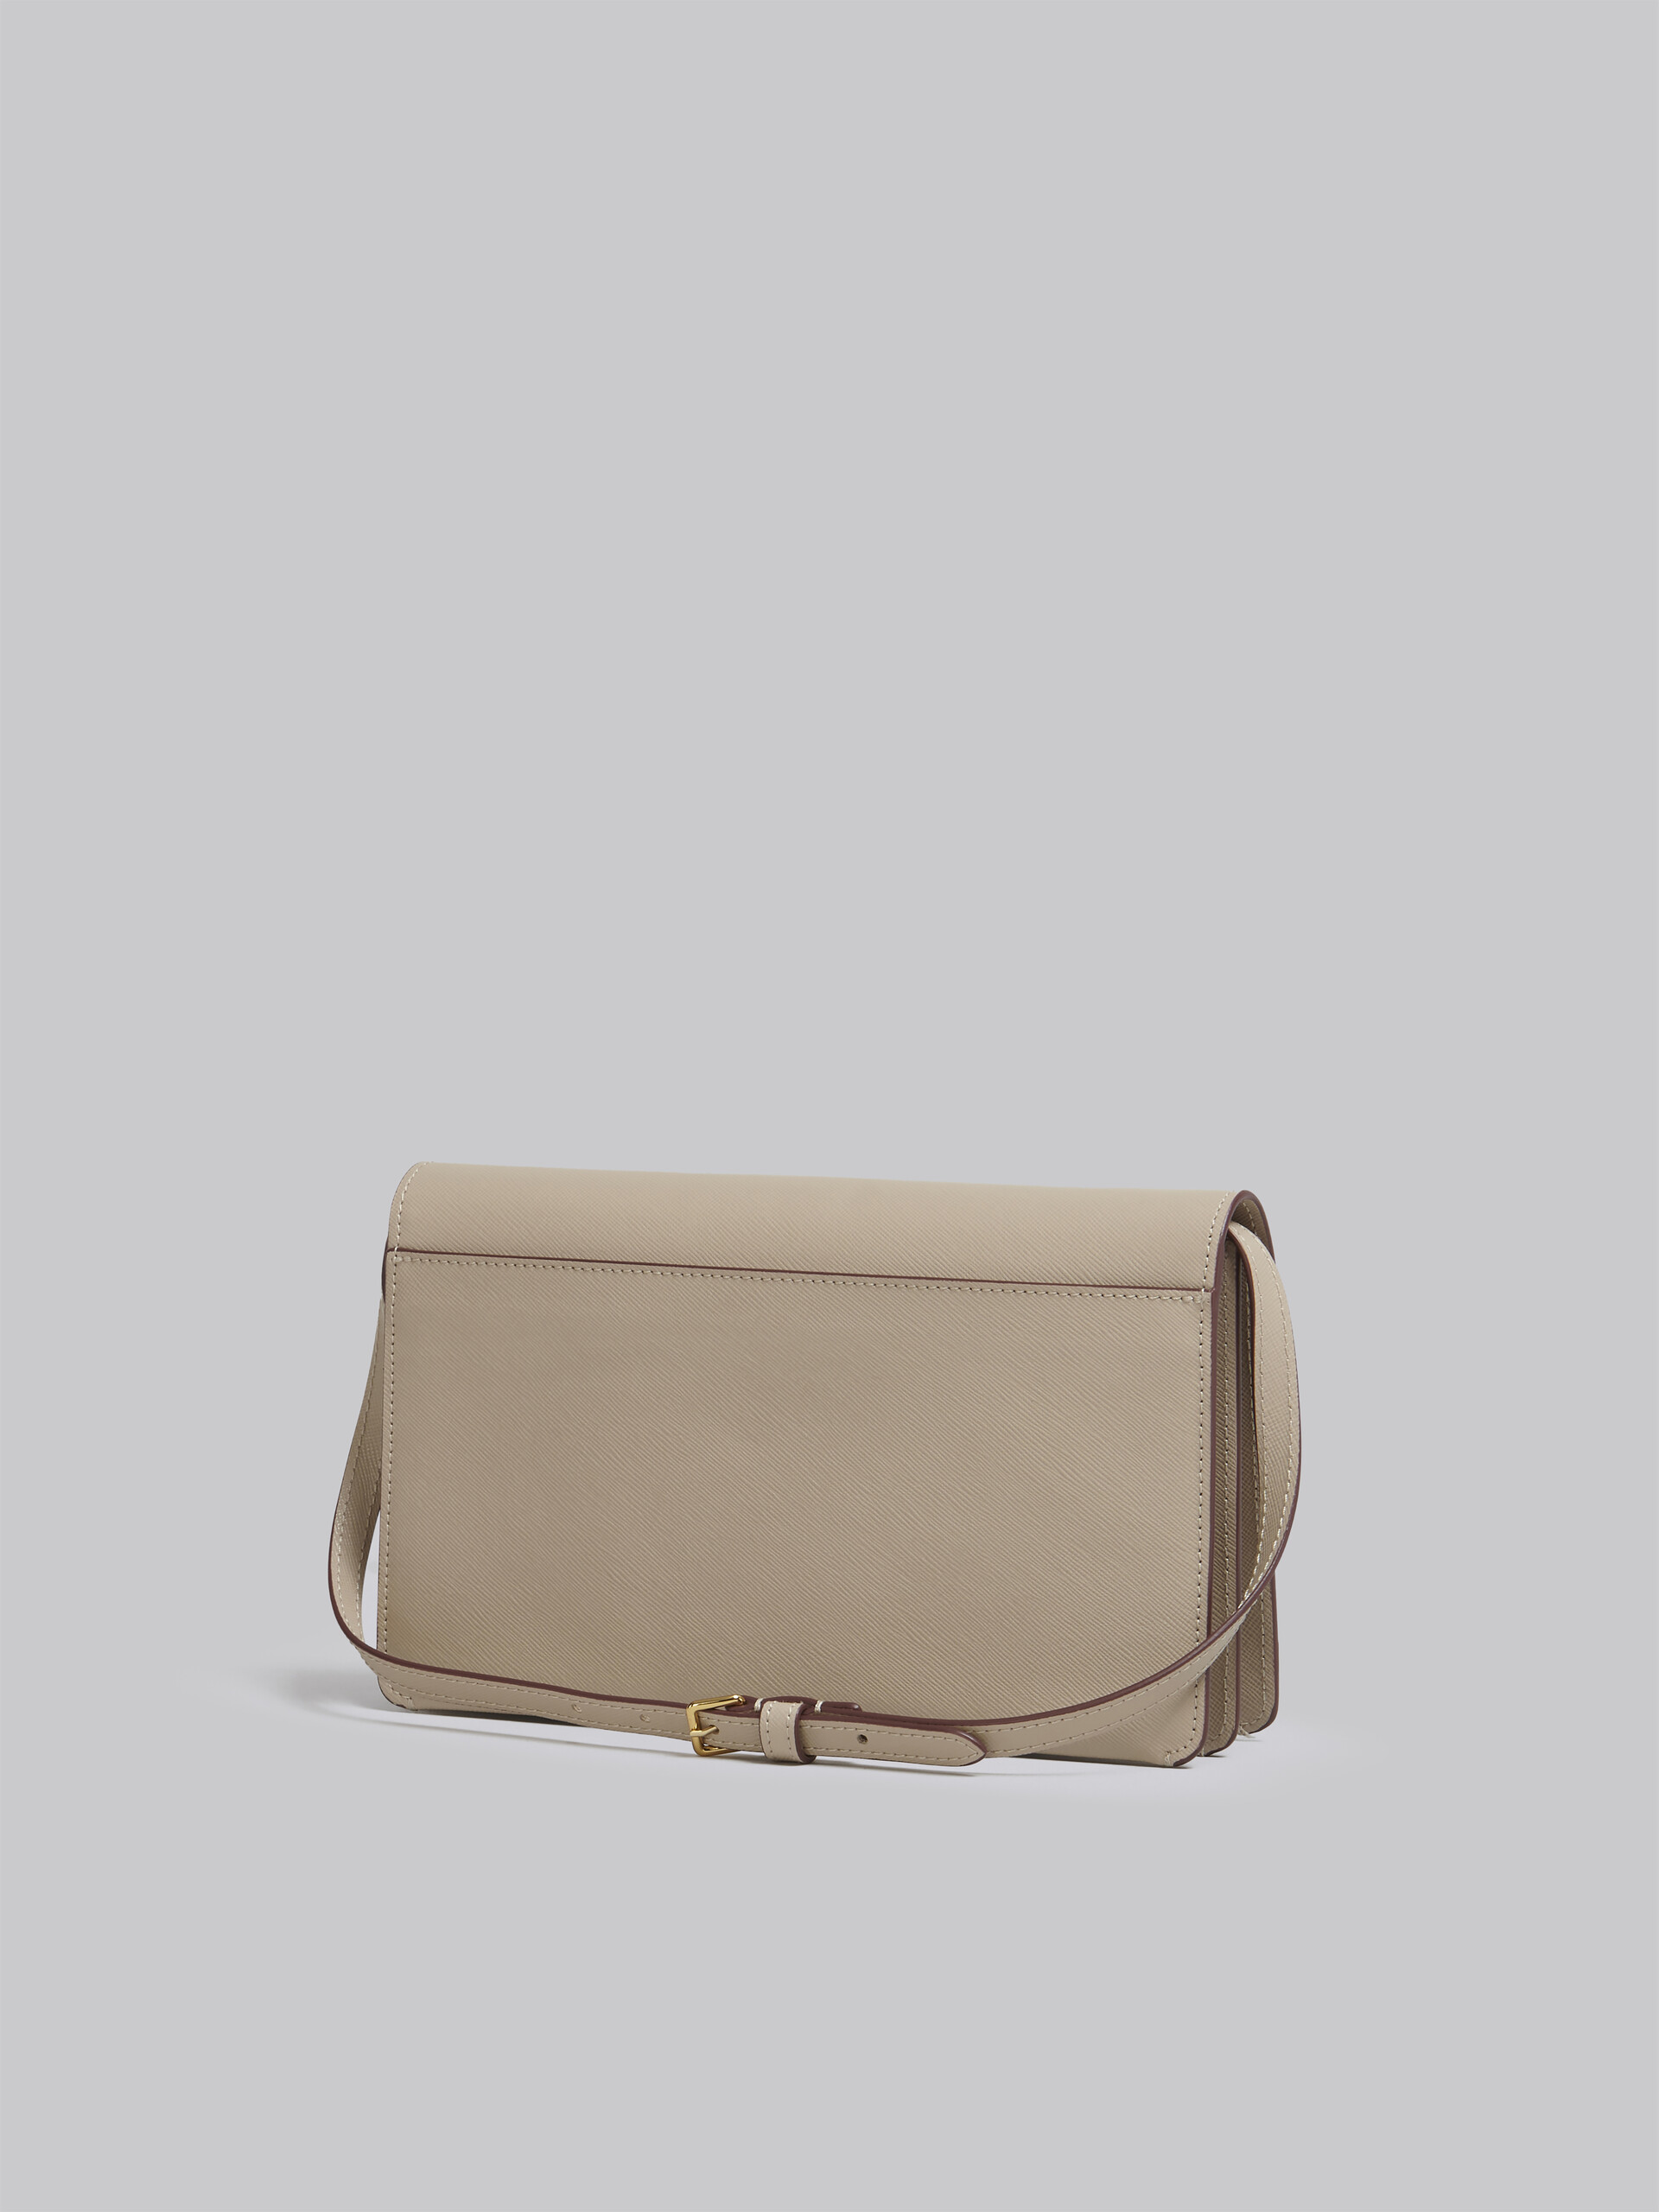 TRUNK clutch bag in beige saffiano leather - Pochette - Image 2